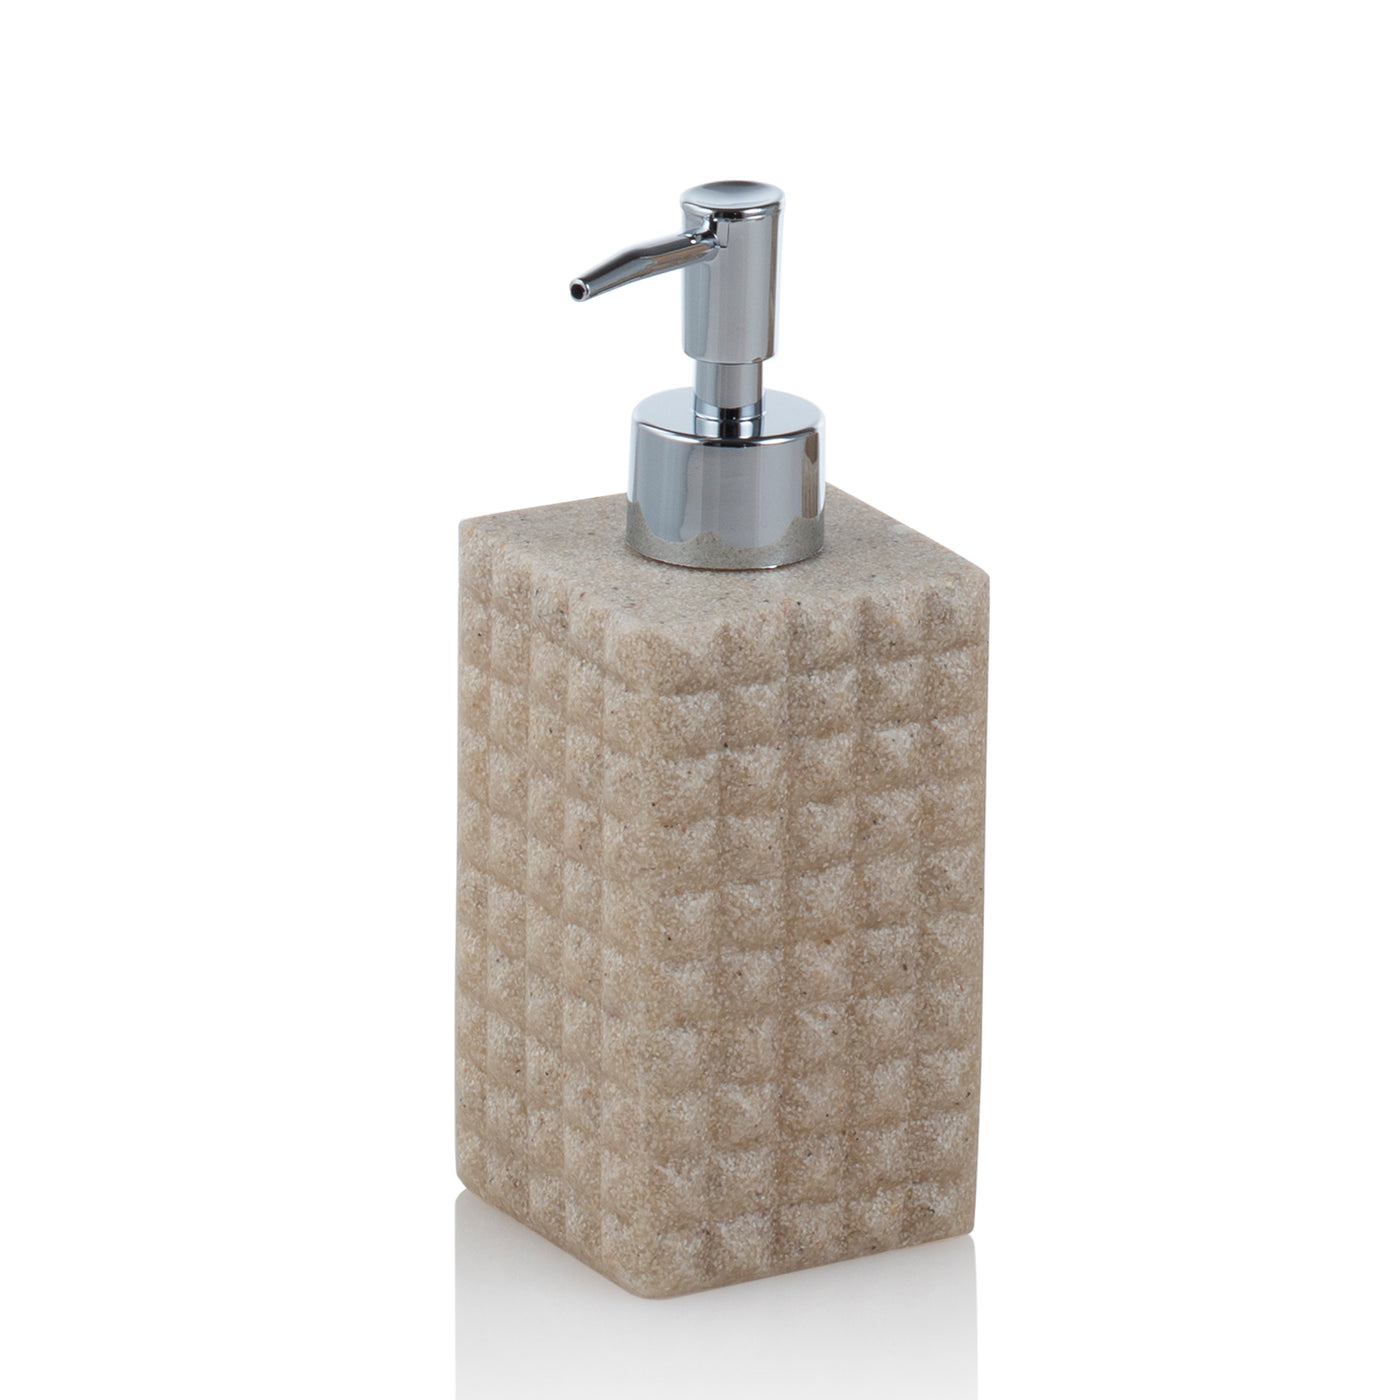 NAAMA sand soap dispenser